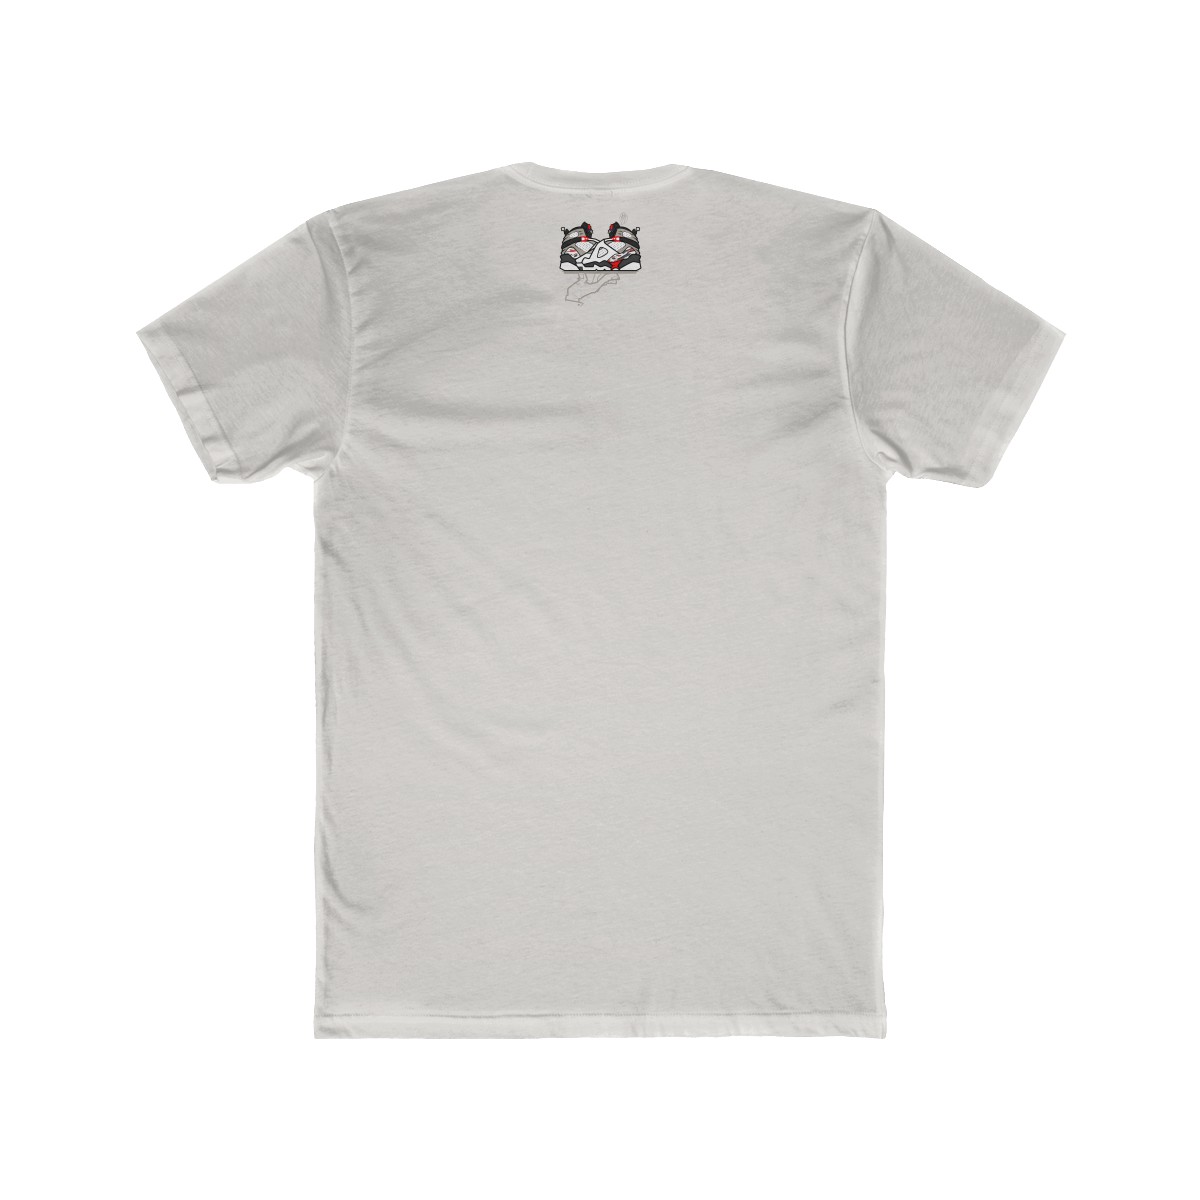 Signature ‘Now Serving A Mas-T-Piece’ Bugs Bunny 8 Hook-up T-Shirt